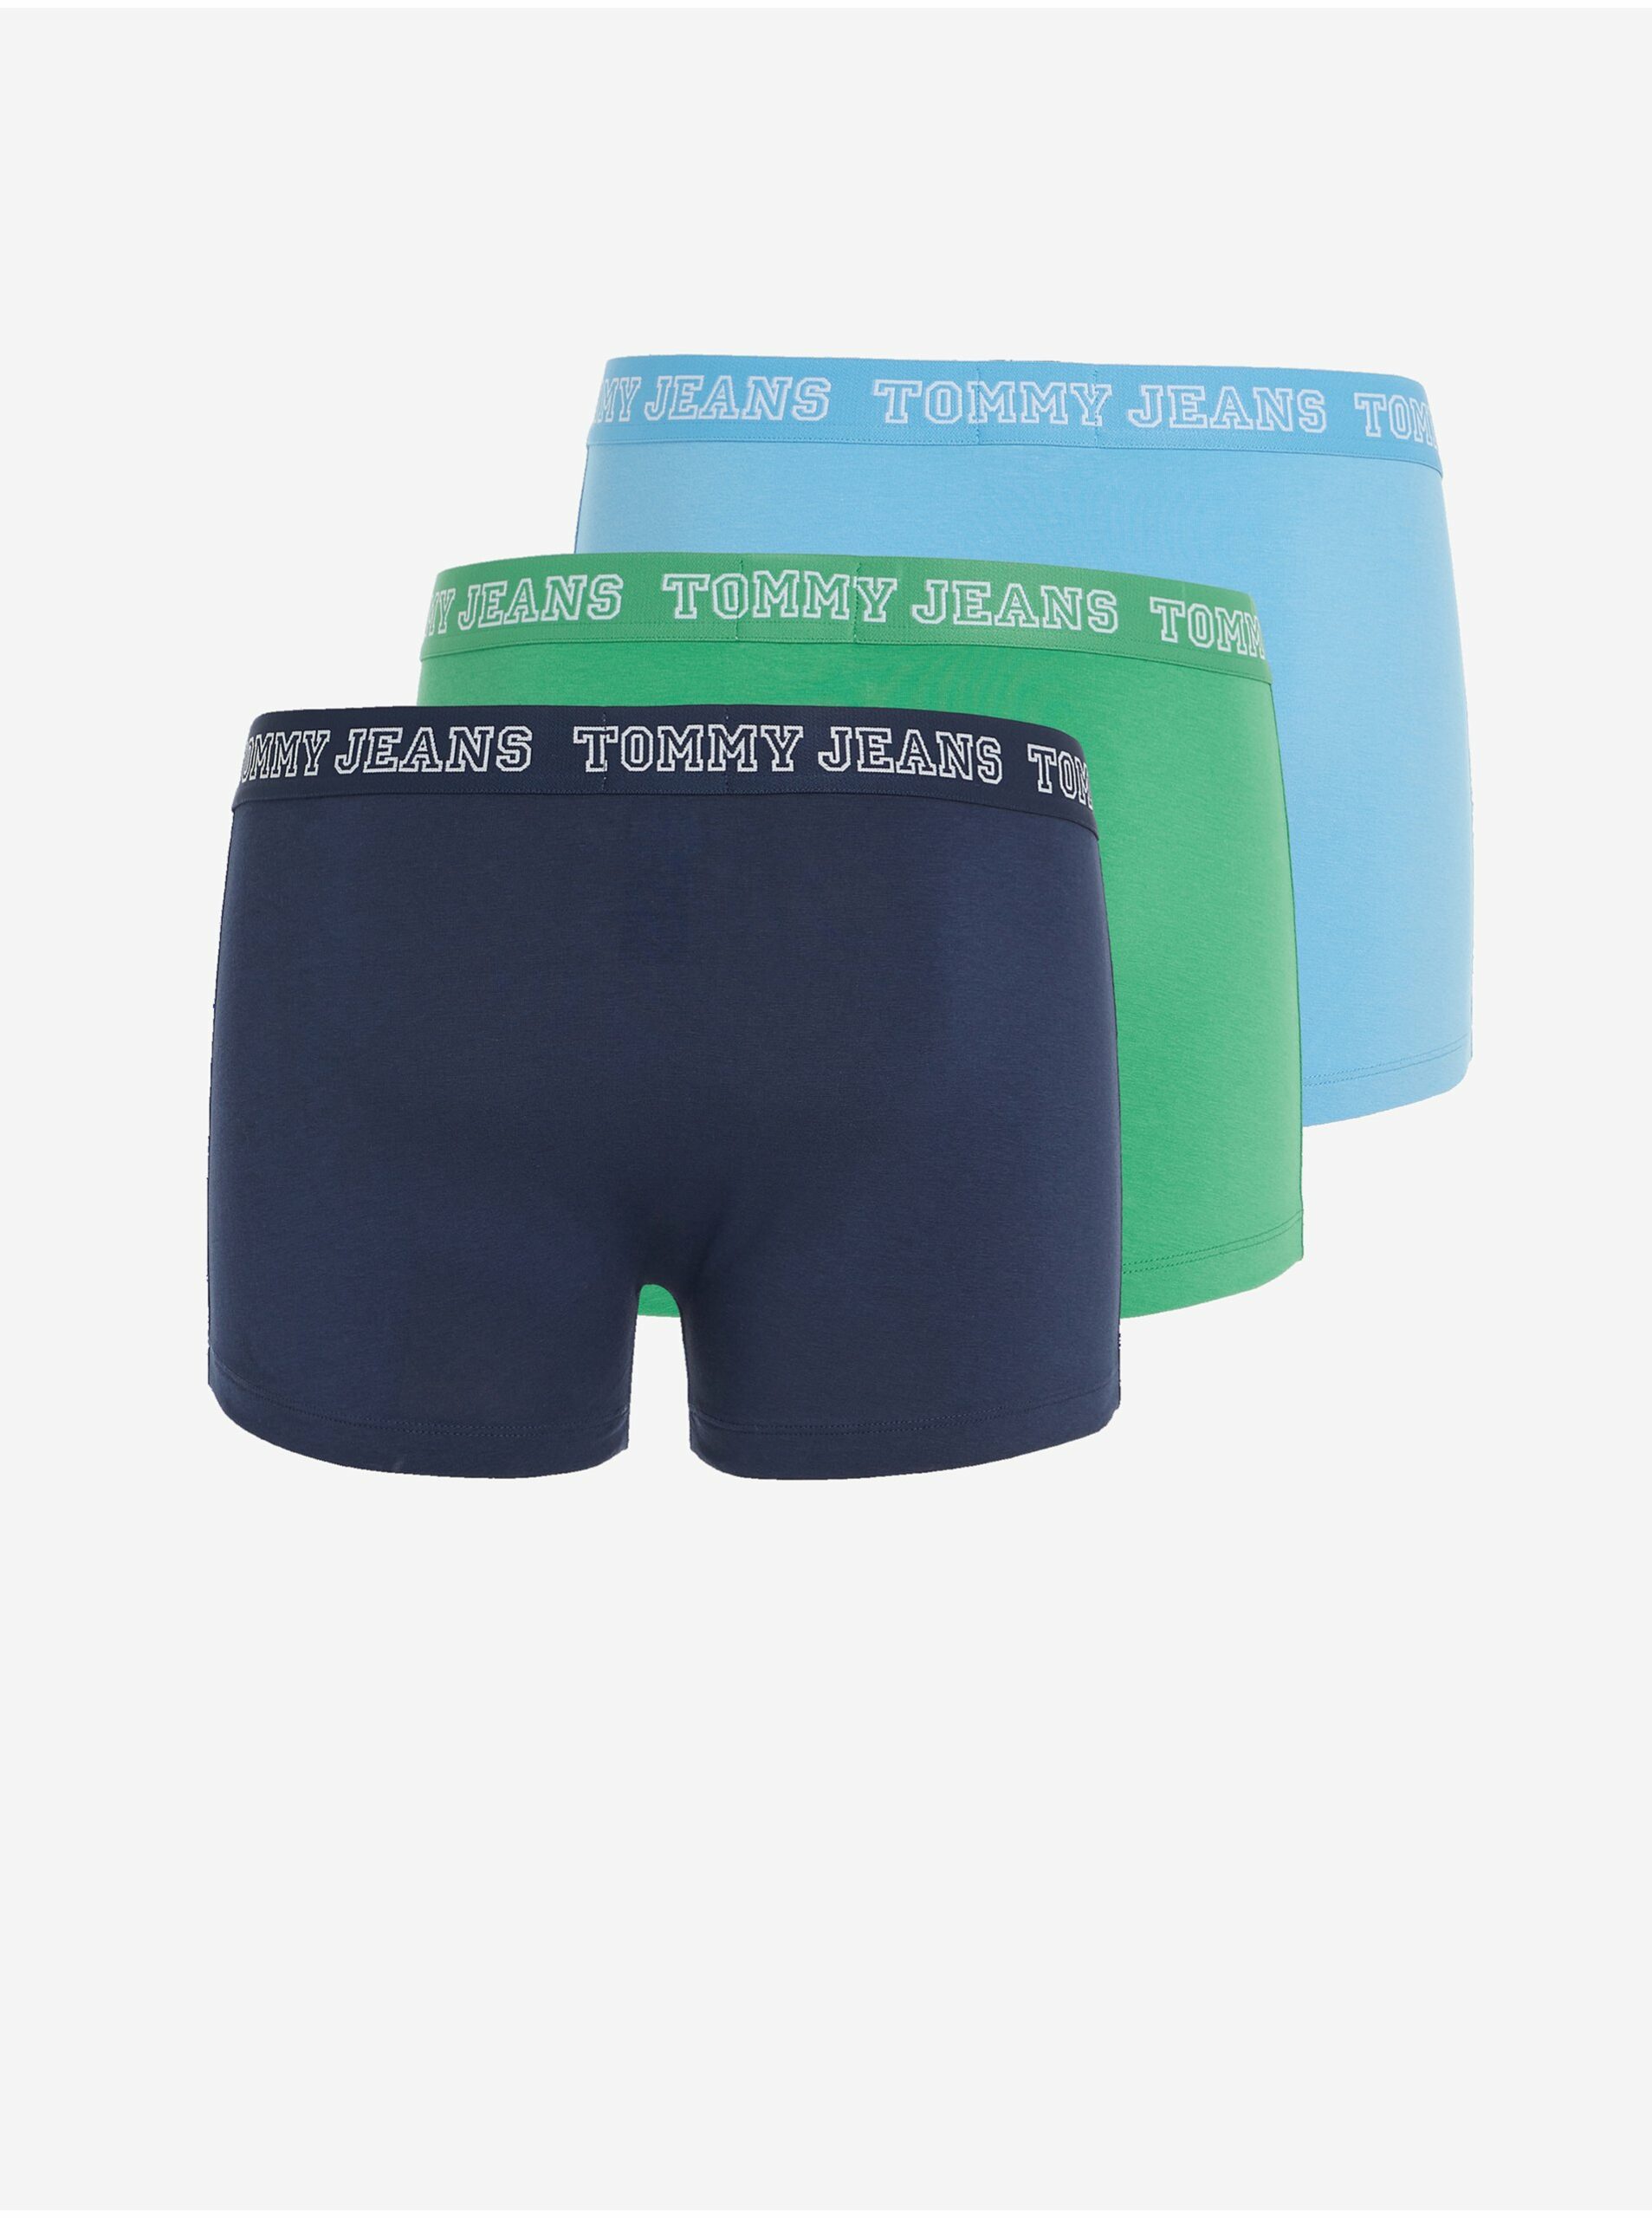 Boxerky pre mužov Tommy Hilfiger Underwear - tmavomodrá, svetlomodrá, zelená